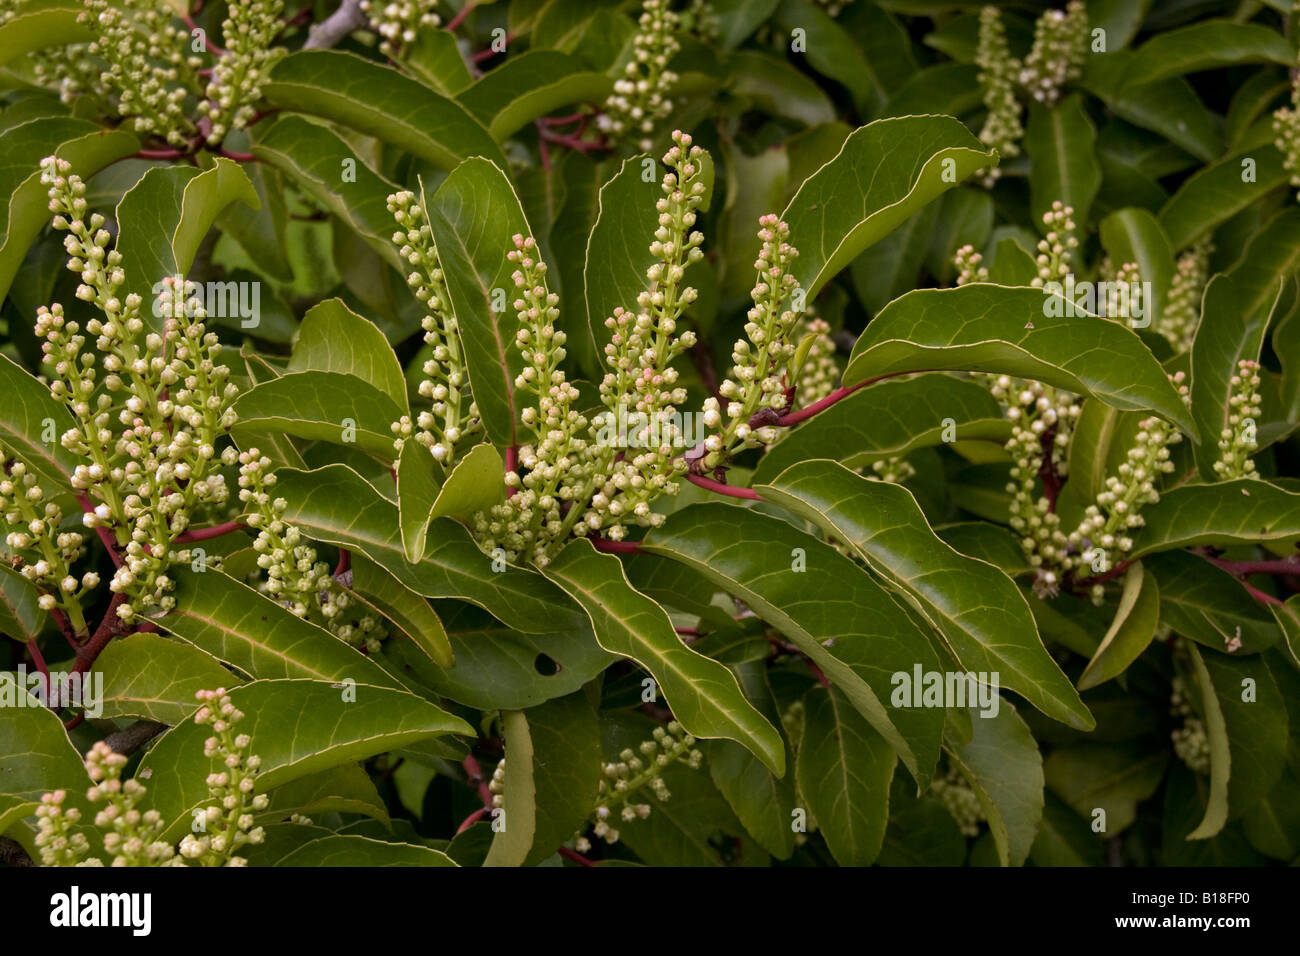 Portugal Laurel flowering shoot Stock Photo